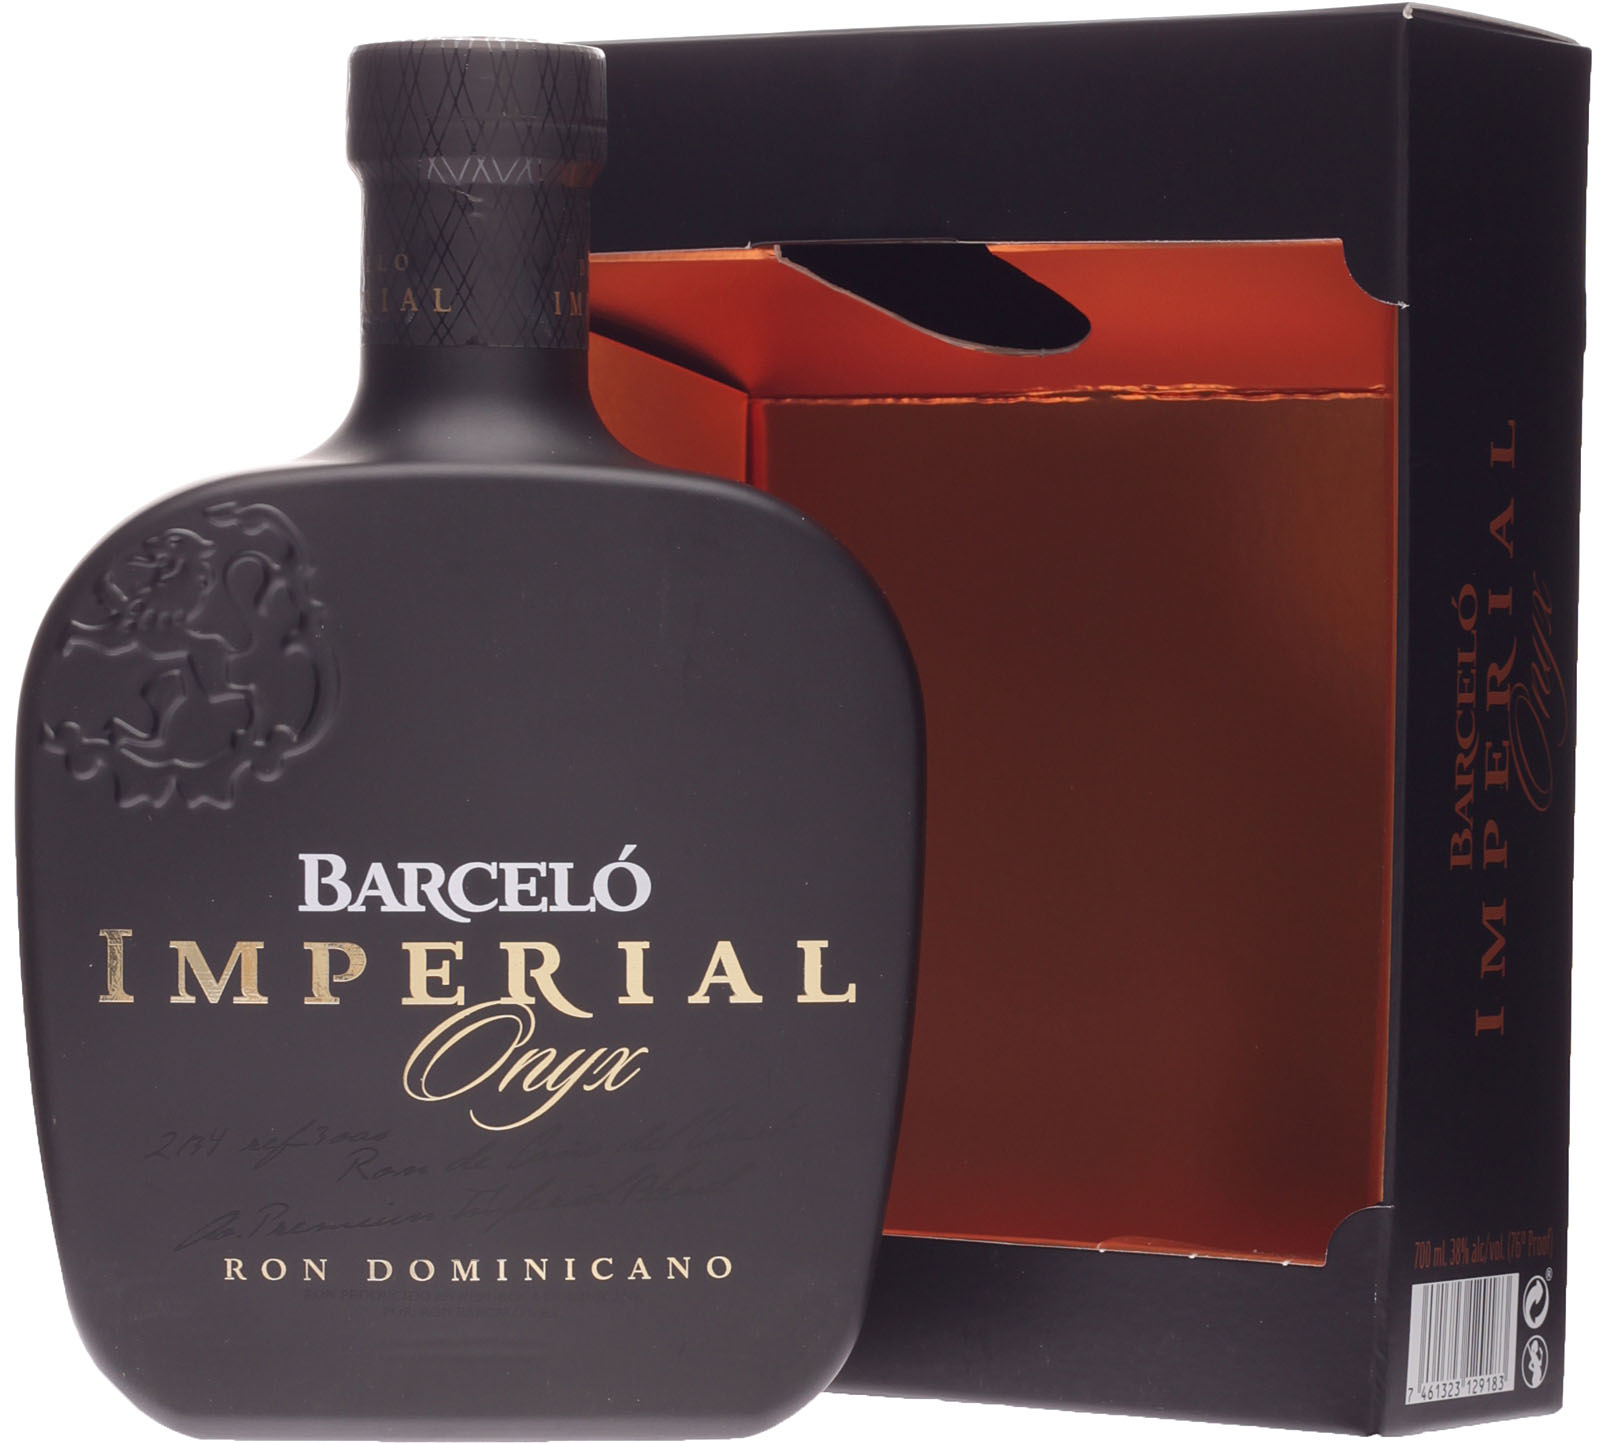 Barcelo Imperial Onyx Dominicano Rum 0,7 Liter 38 % Vol